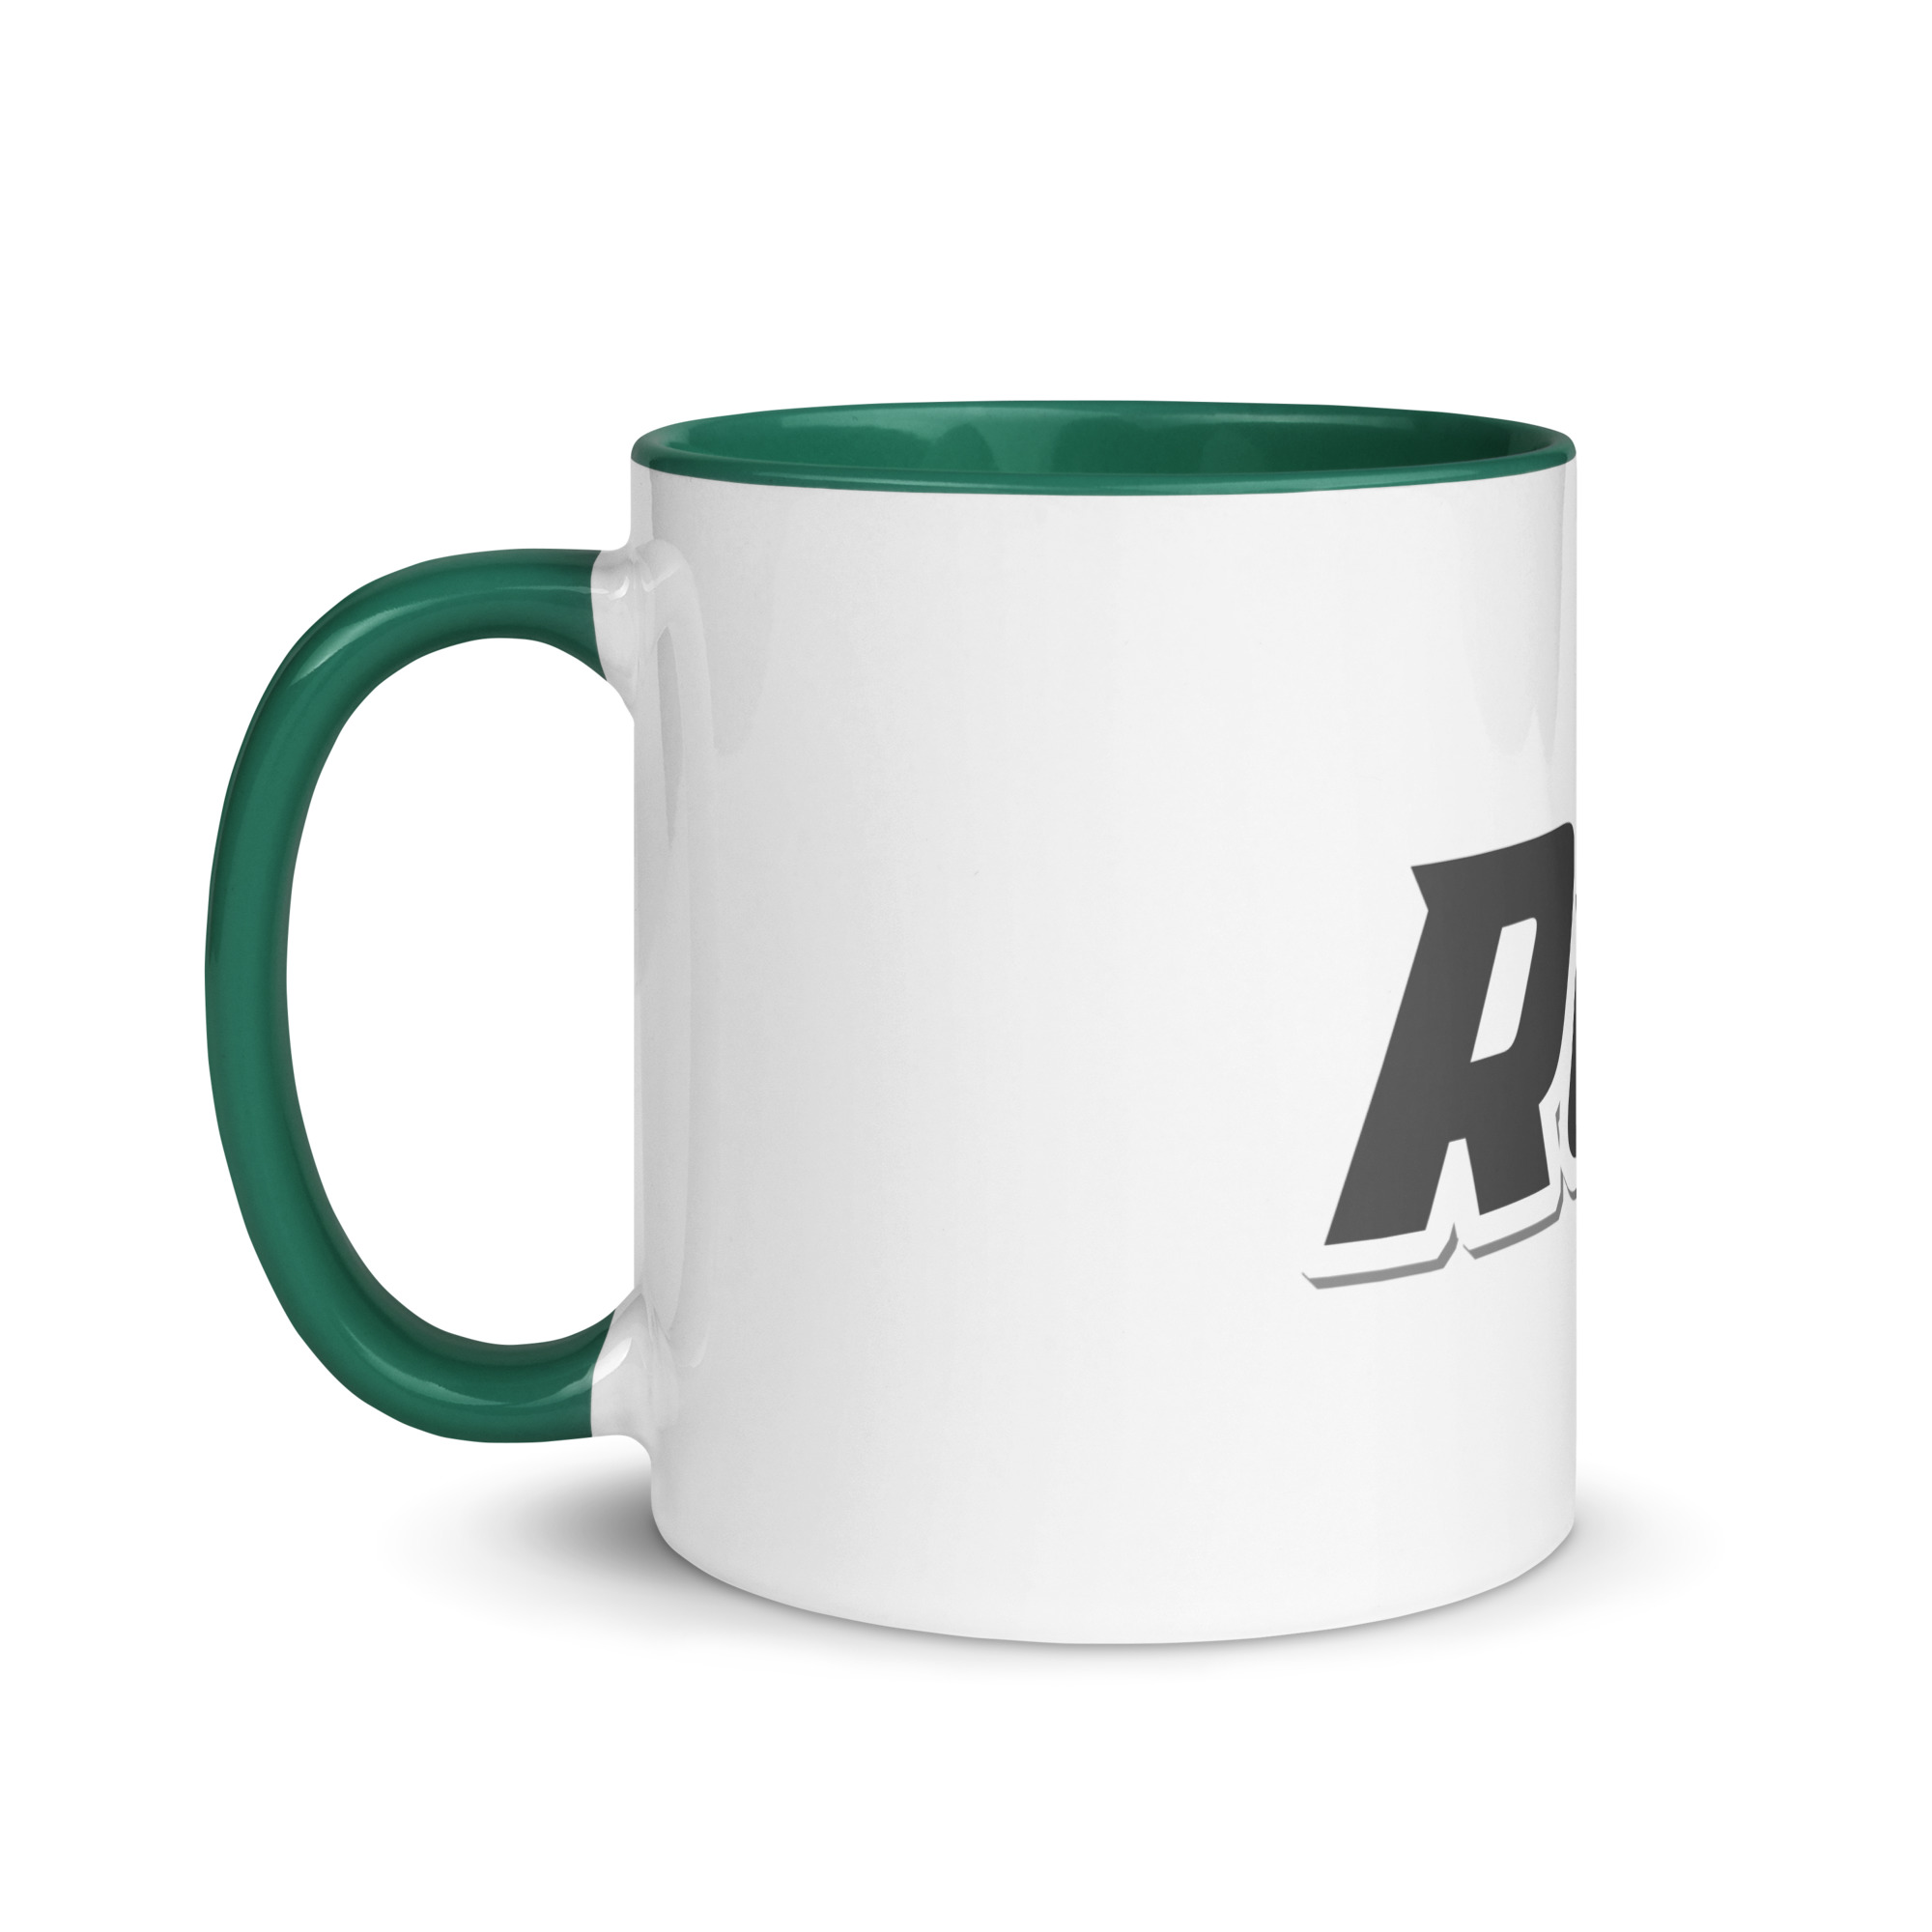 white-ceramic-mug-with-color-inside-dark-green-11-oz-left-6525b6484c49f.jpg